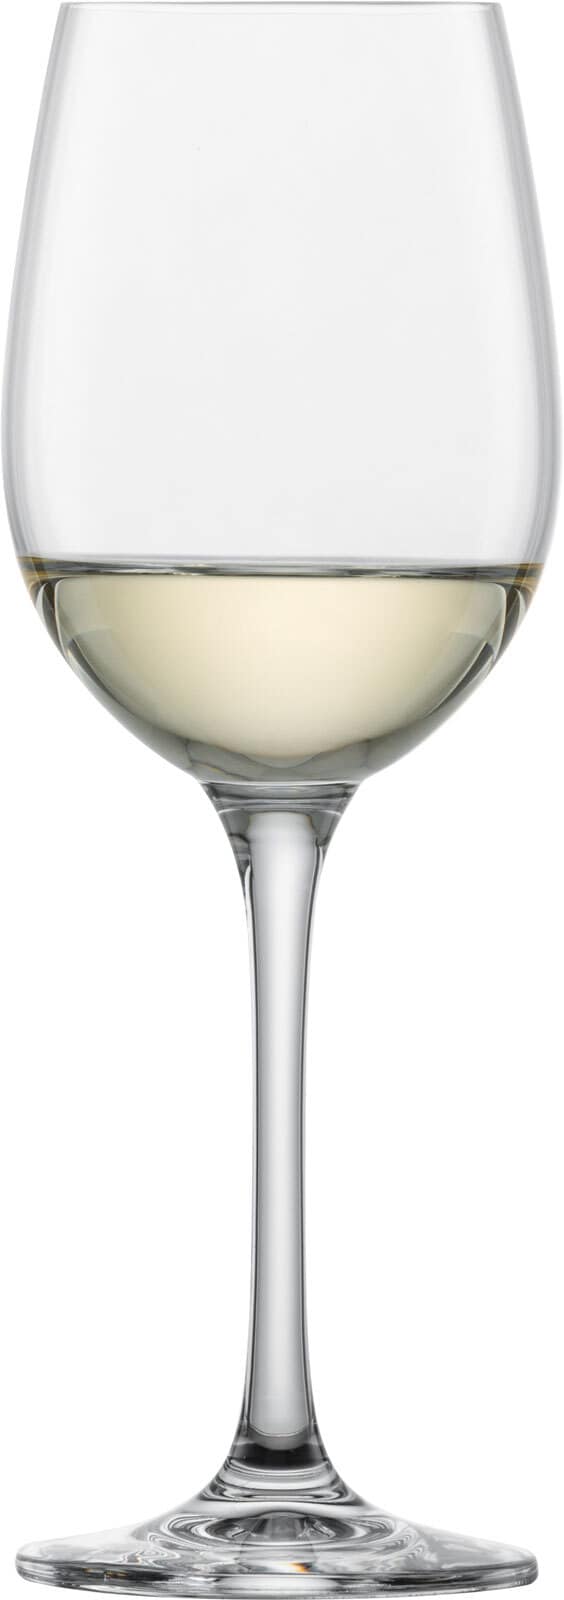 SCHOTT ZWIESEL Weißweinglas CLASSICO 312 ml